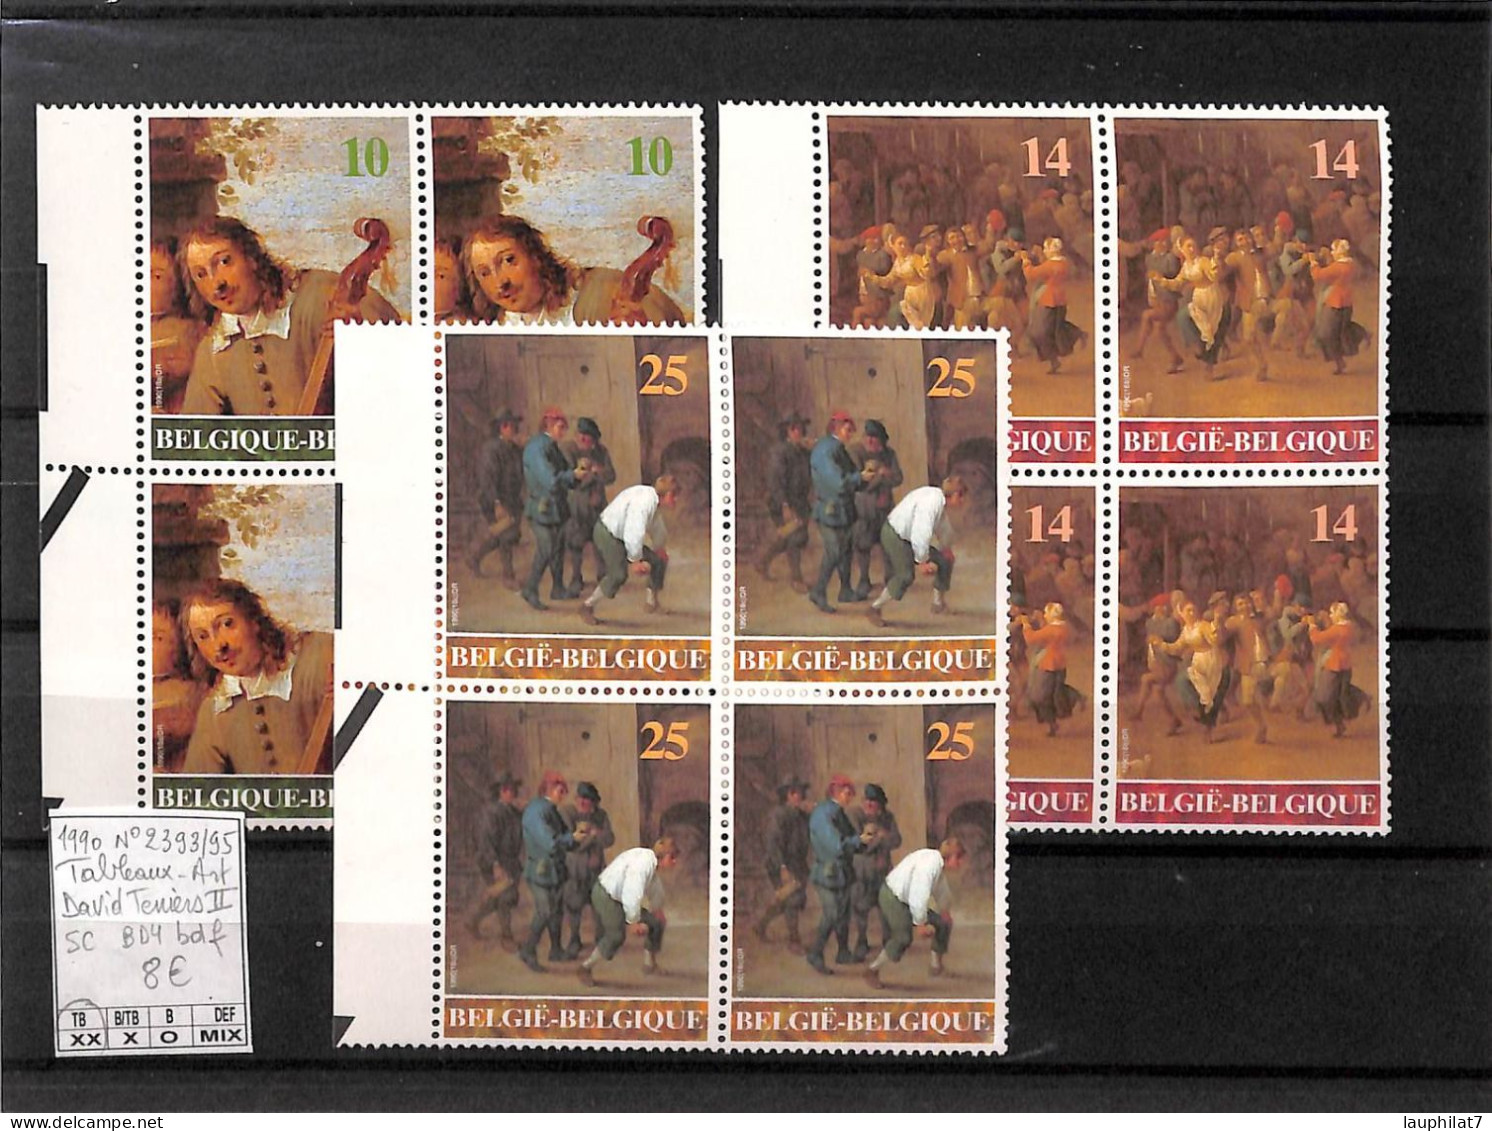 [502910]TB//**/Mnh-Belgique 1990 - N° 2393/95, David Reniers II, SC, Bd4, Bdf, Peintures & Tableaux, Arts - Unused Stamps